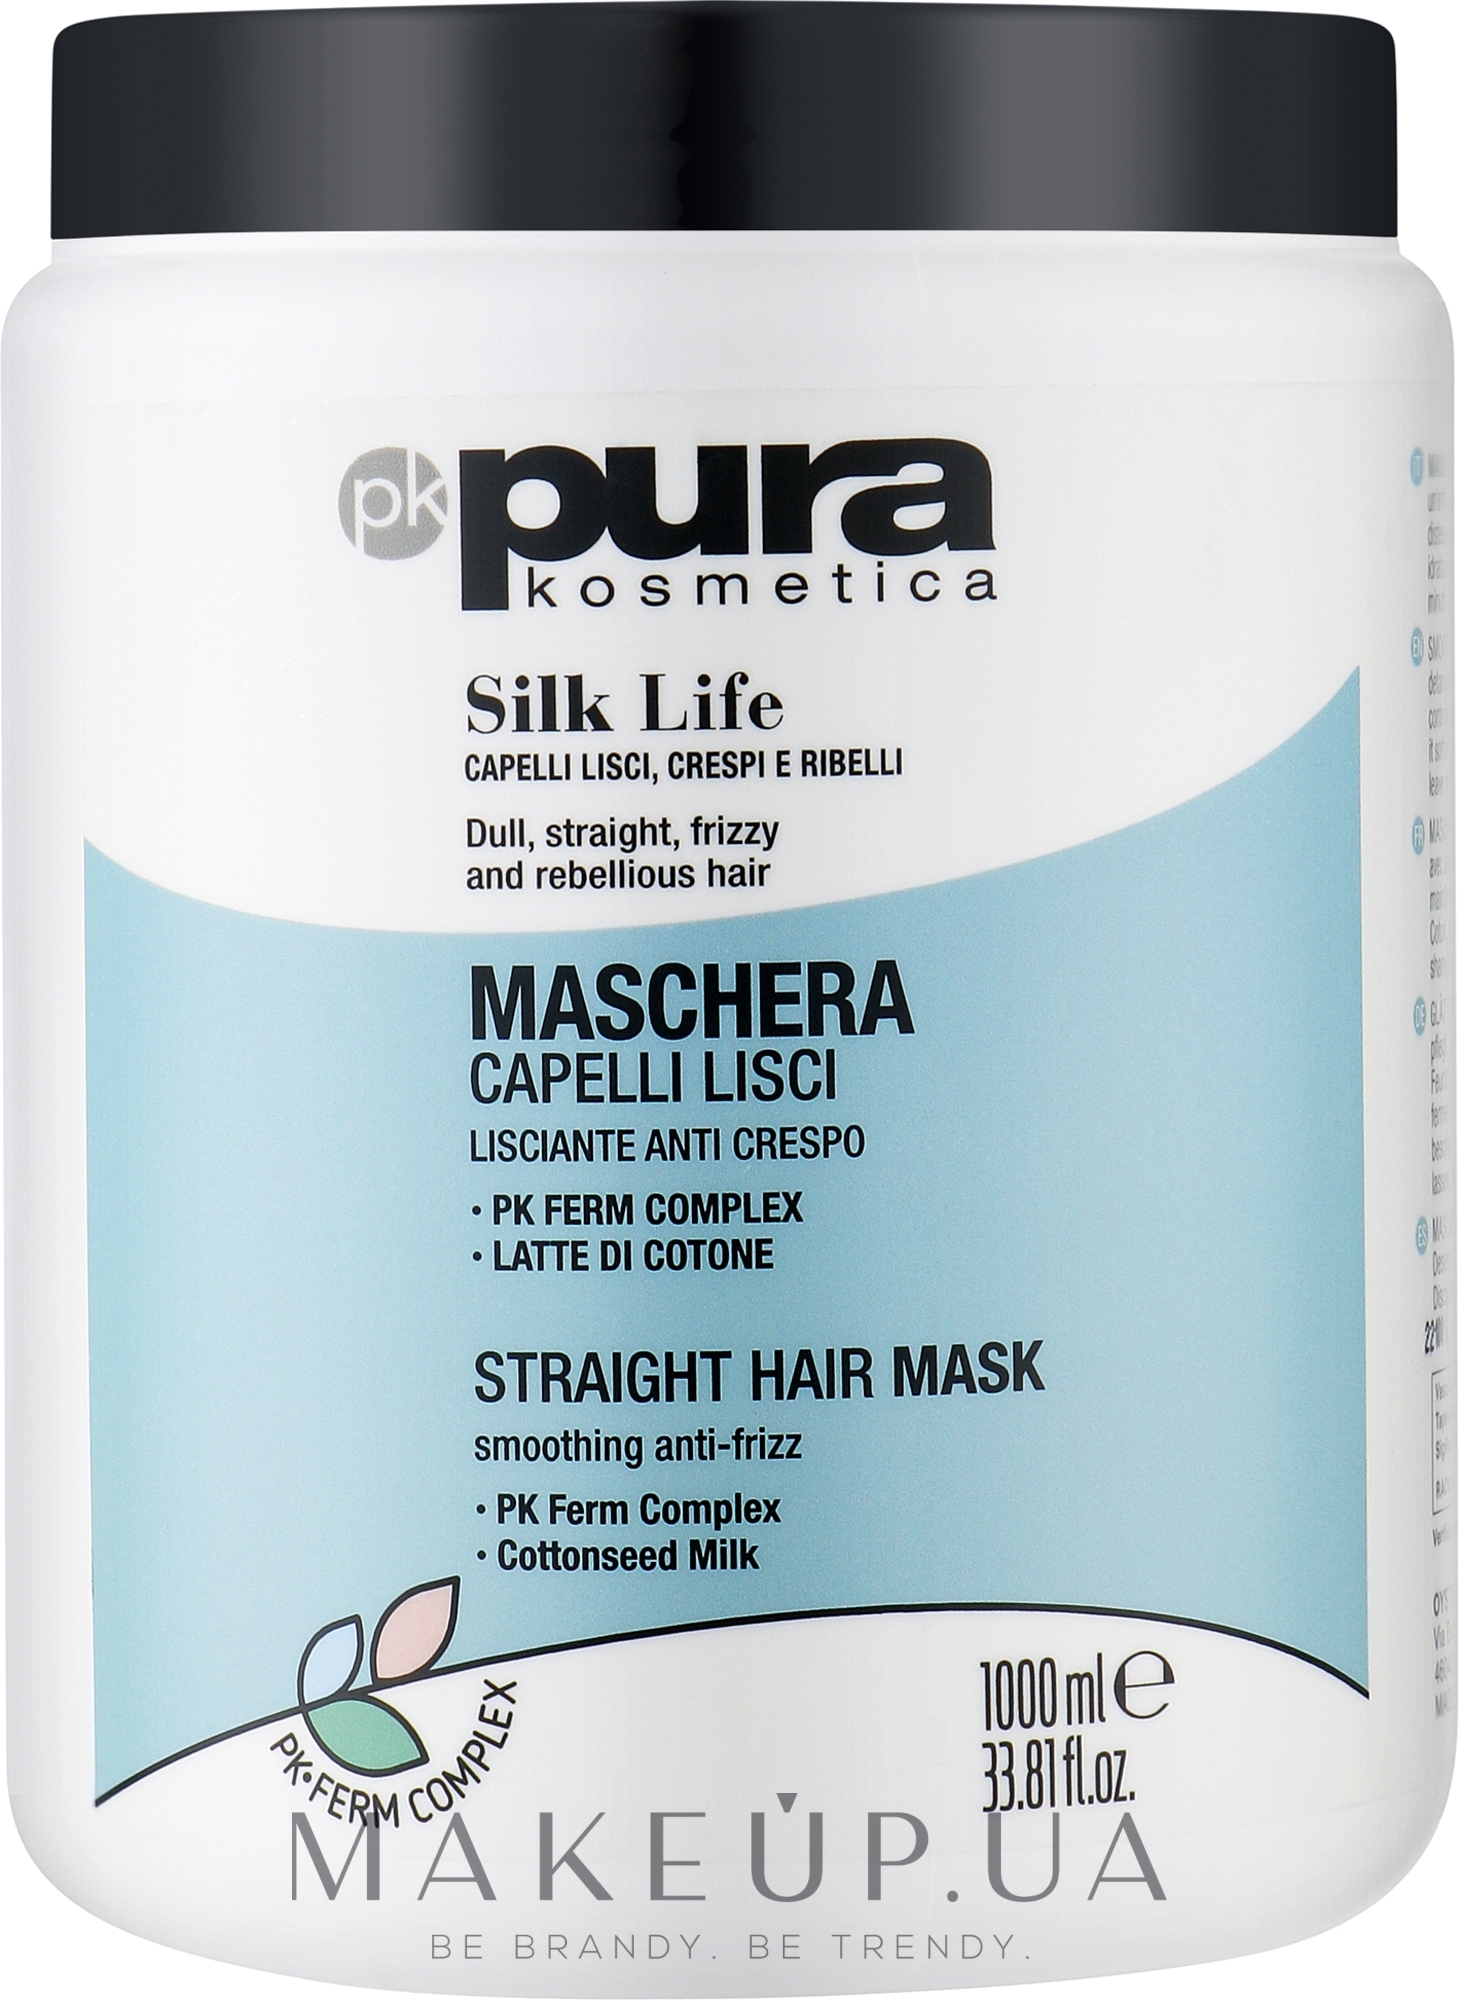 Маска для волосся - Pura Kosmetica Silk Life Mask — фото 1000ml